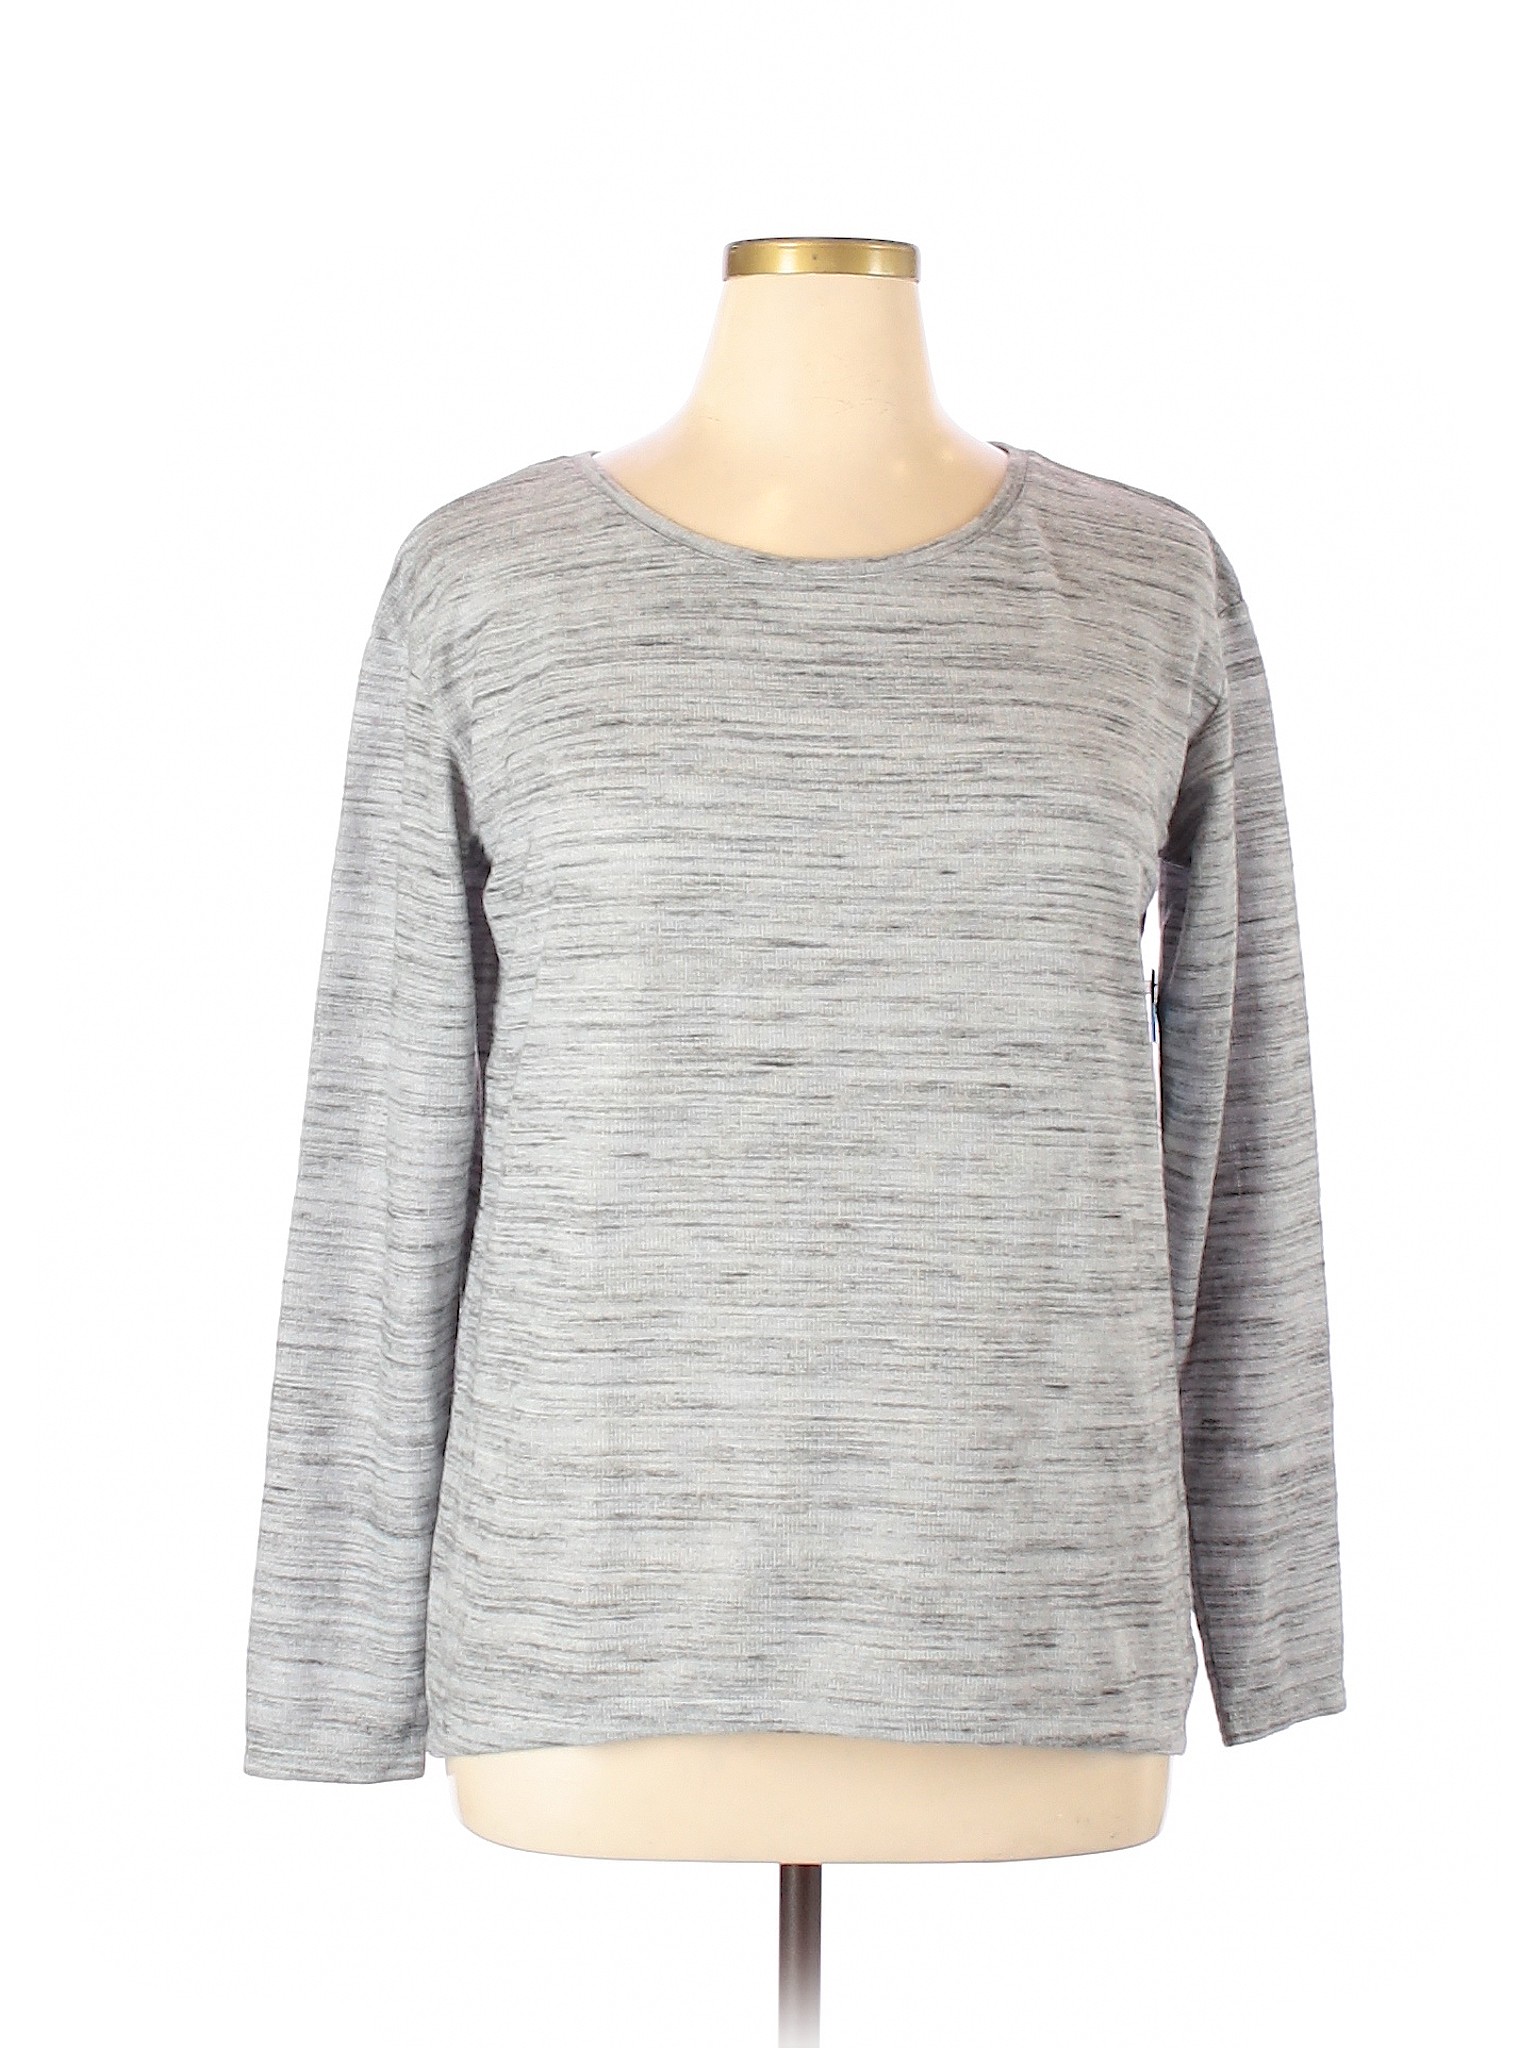 NWT Columbia Women Gray Sweatshirt XL | eBay